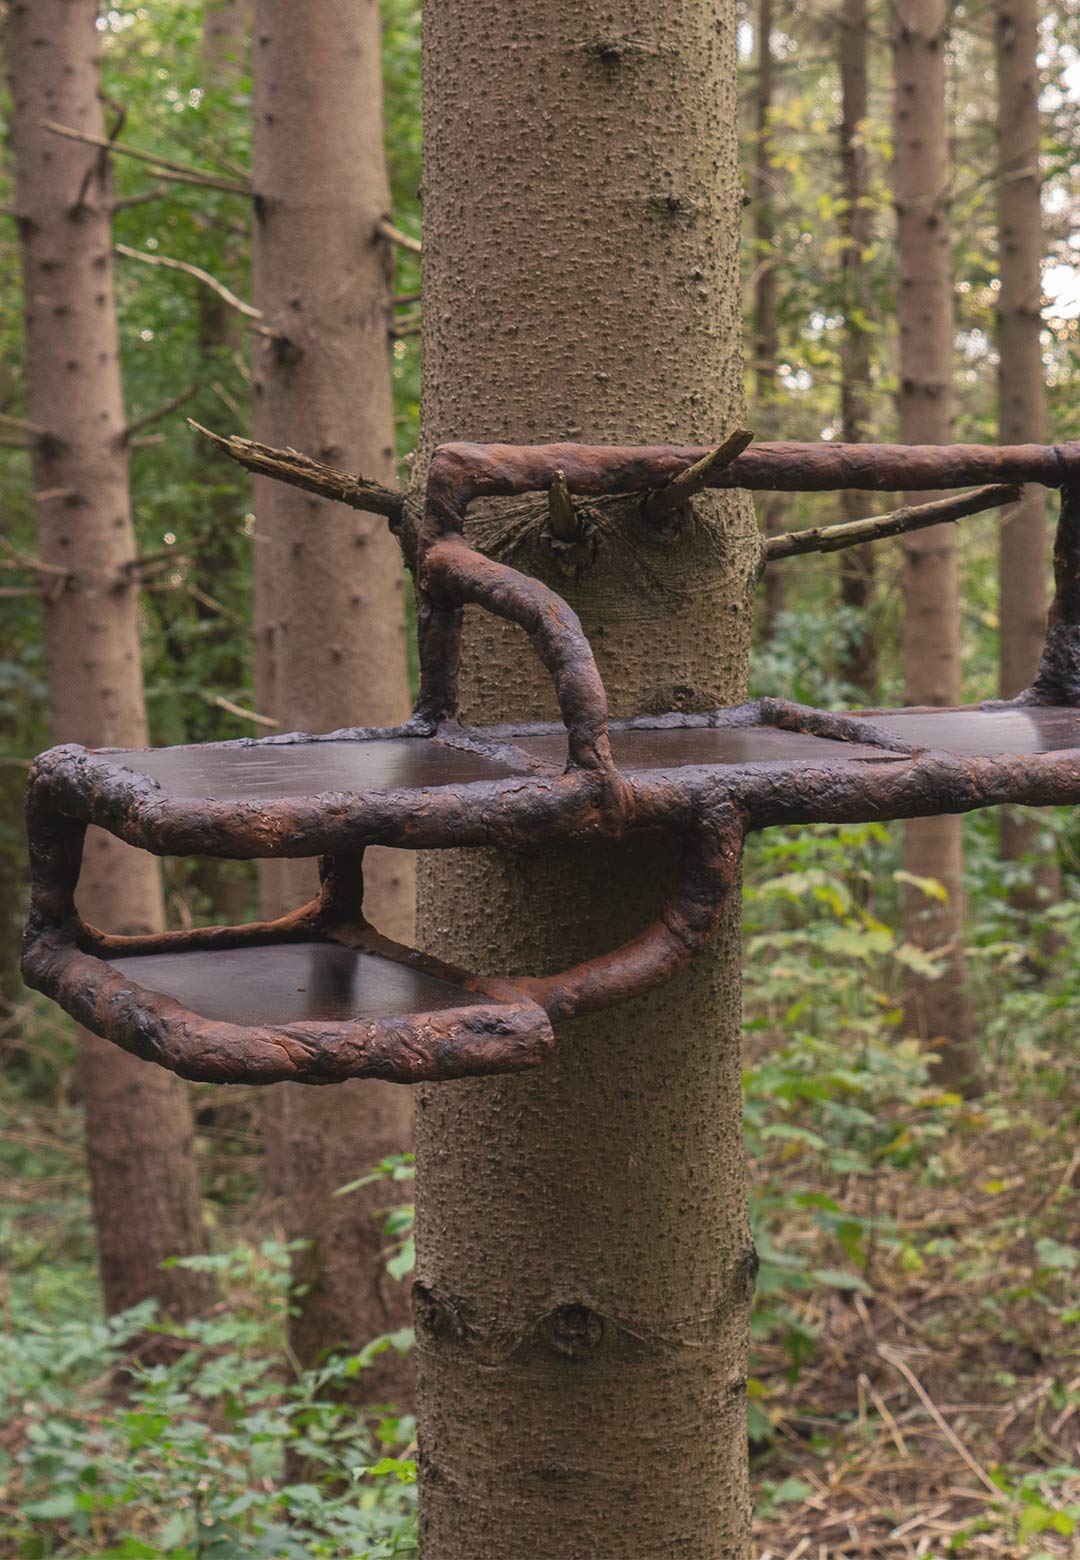 Basse Stittgen’s ‘Tree-ism’ crafts a reverent dialogue between nature and design